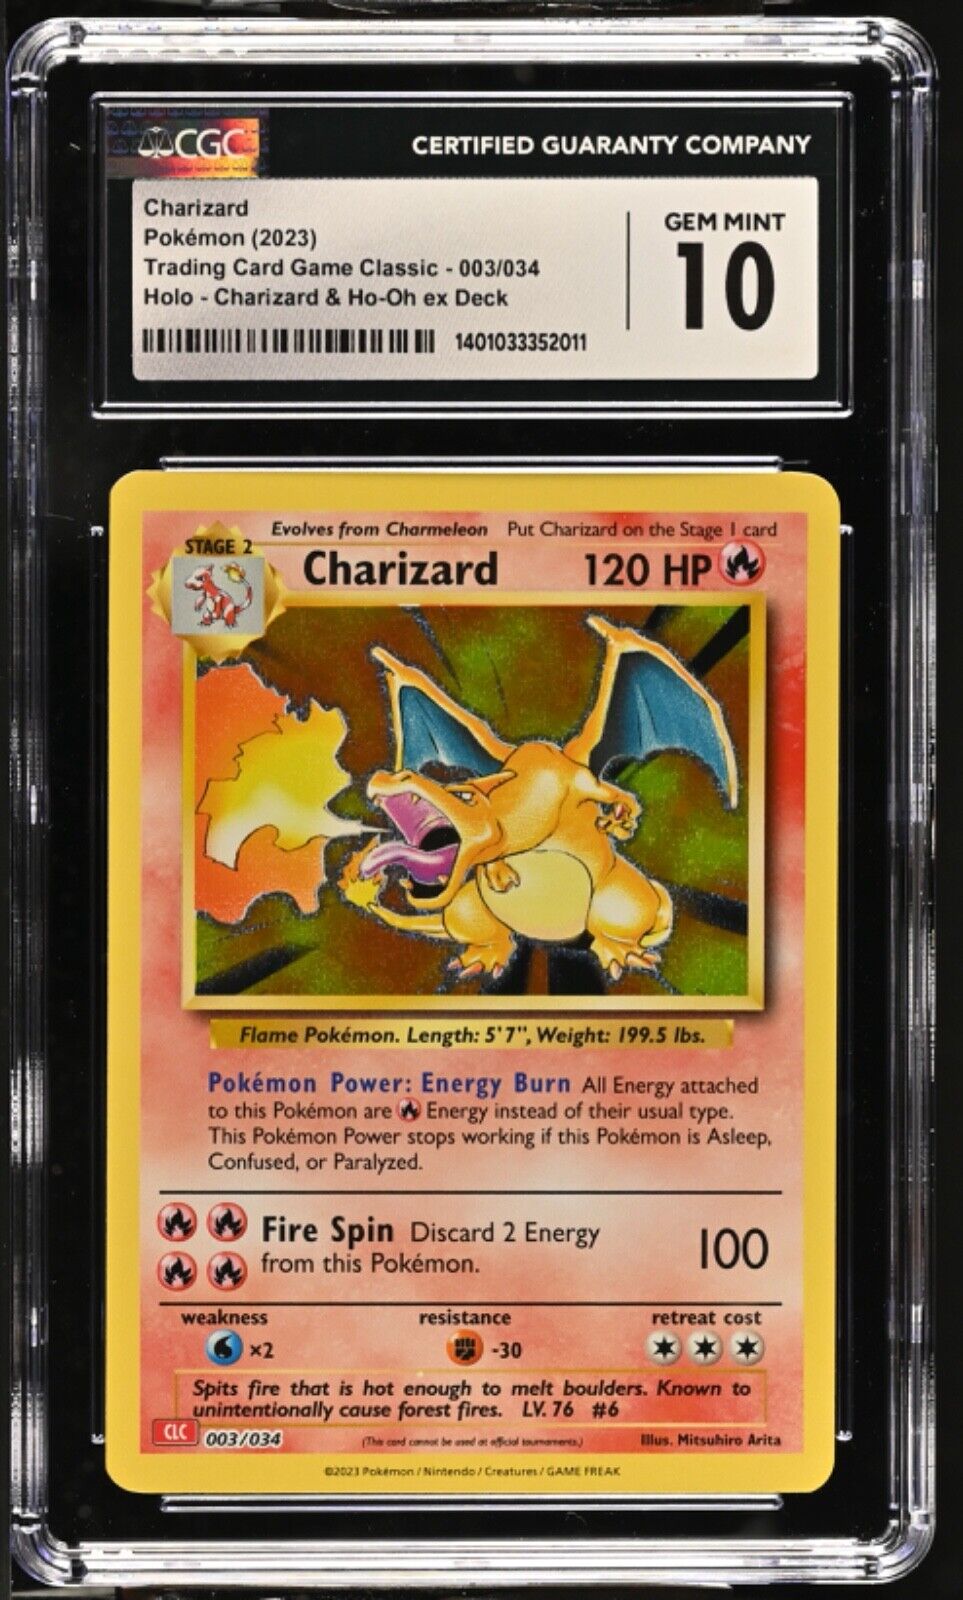 CGC 10 Charizard CLC 003/034 Pokémon Card - GEM MINT